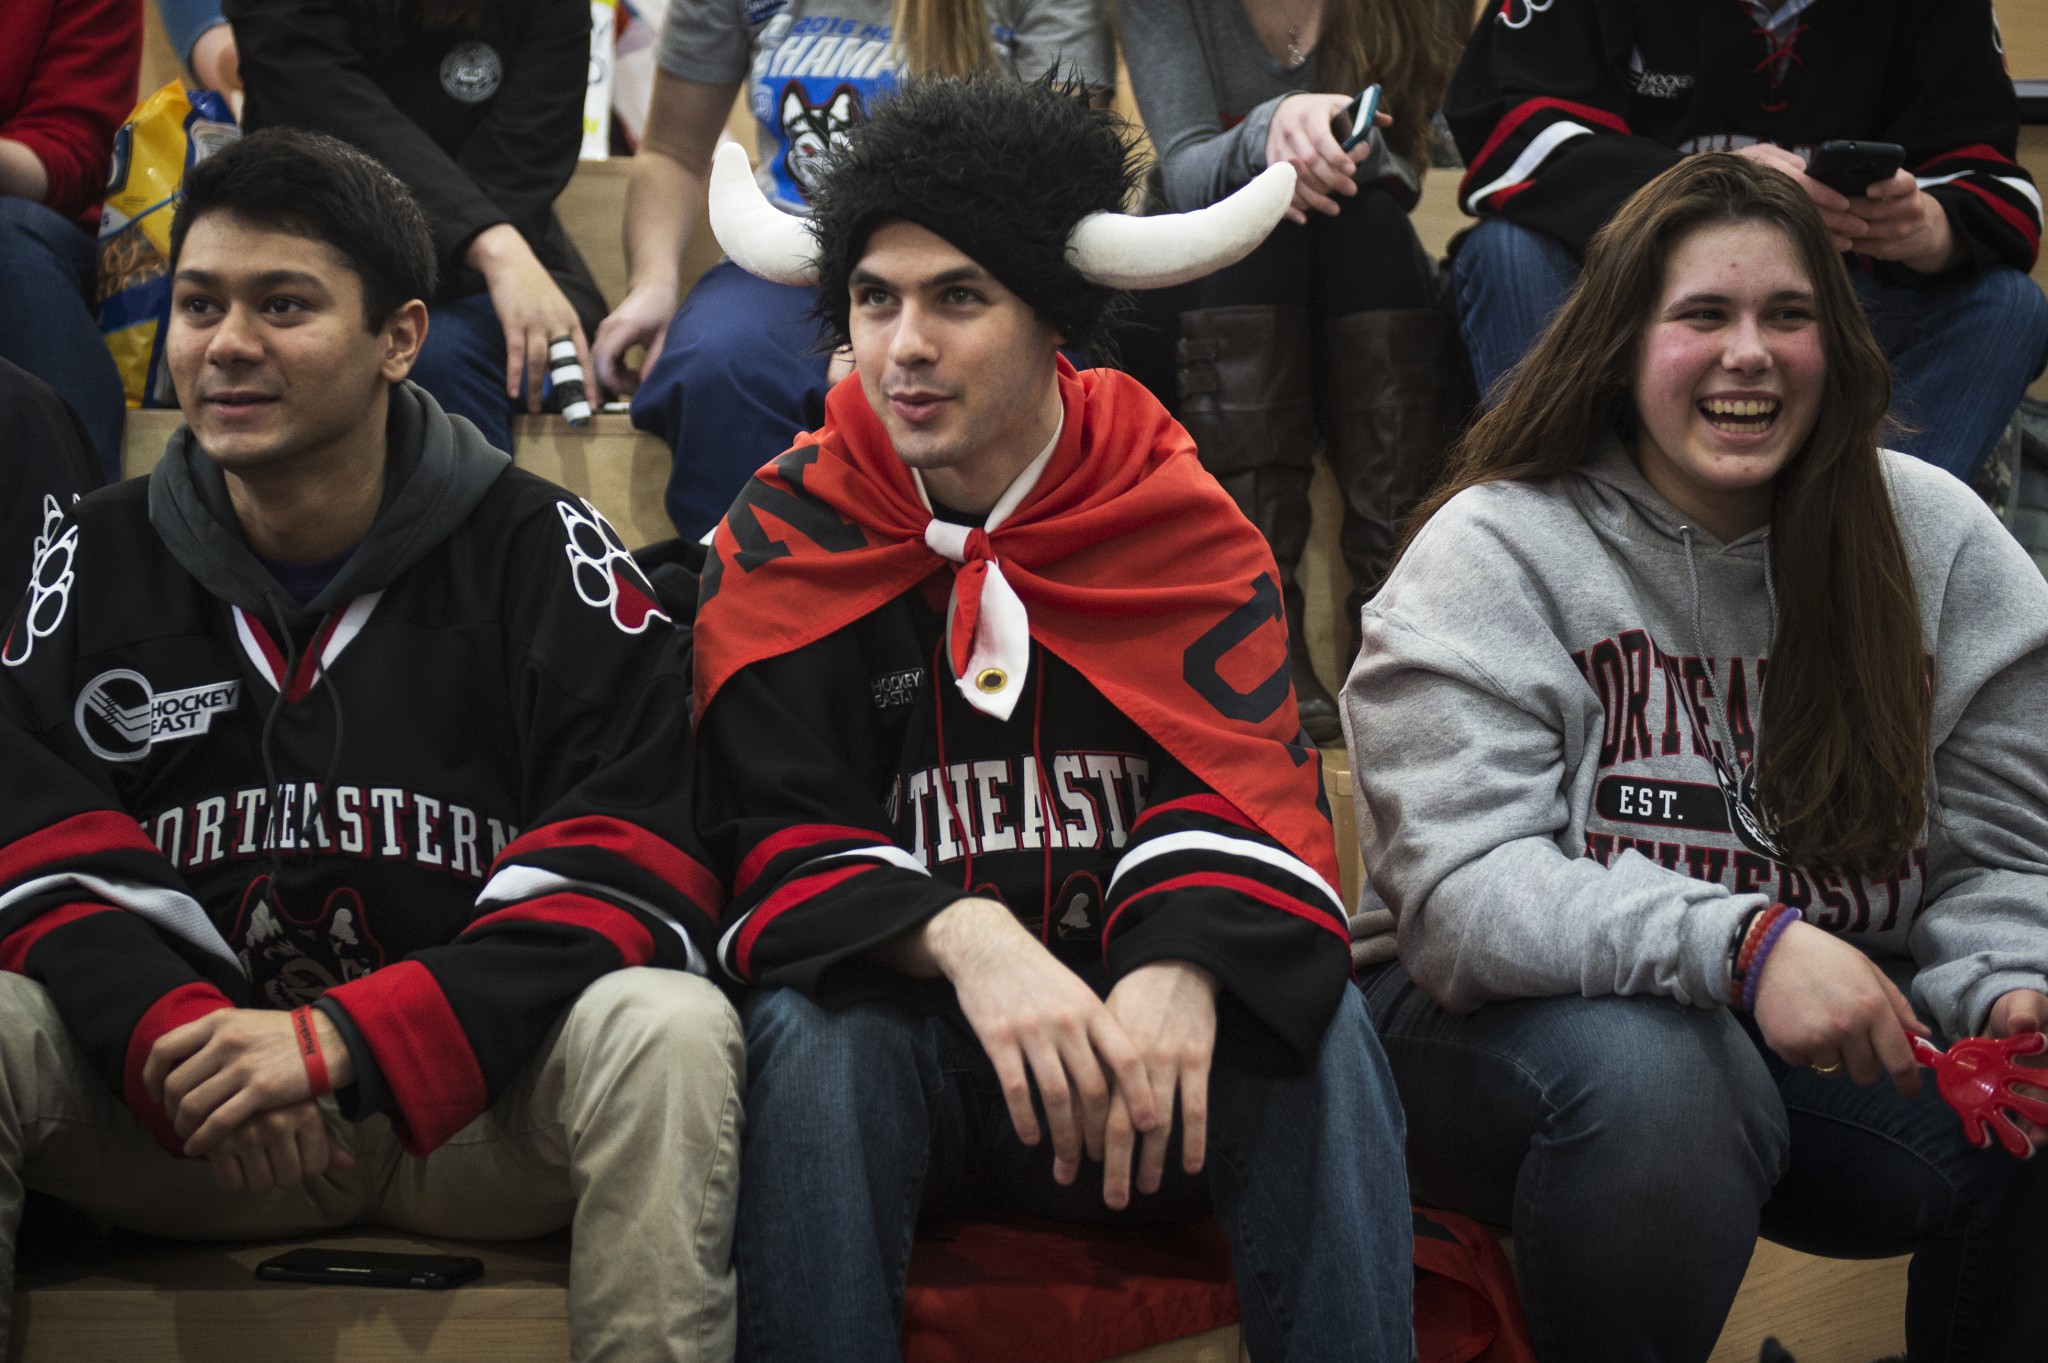 3 students dressed in Northeastern jerseys or sweatshirts